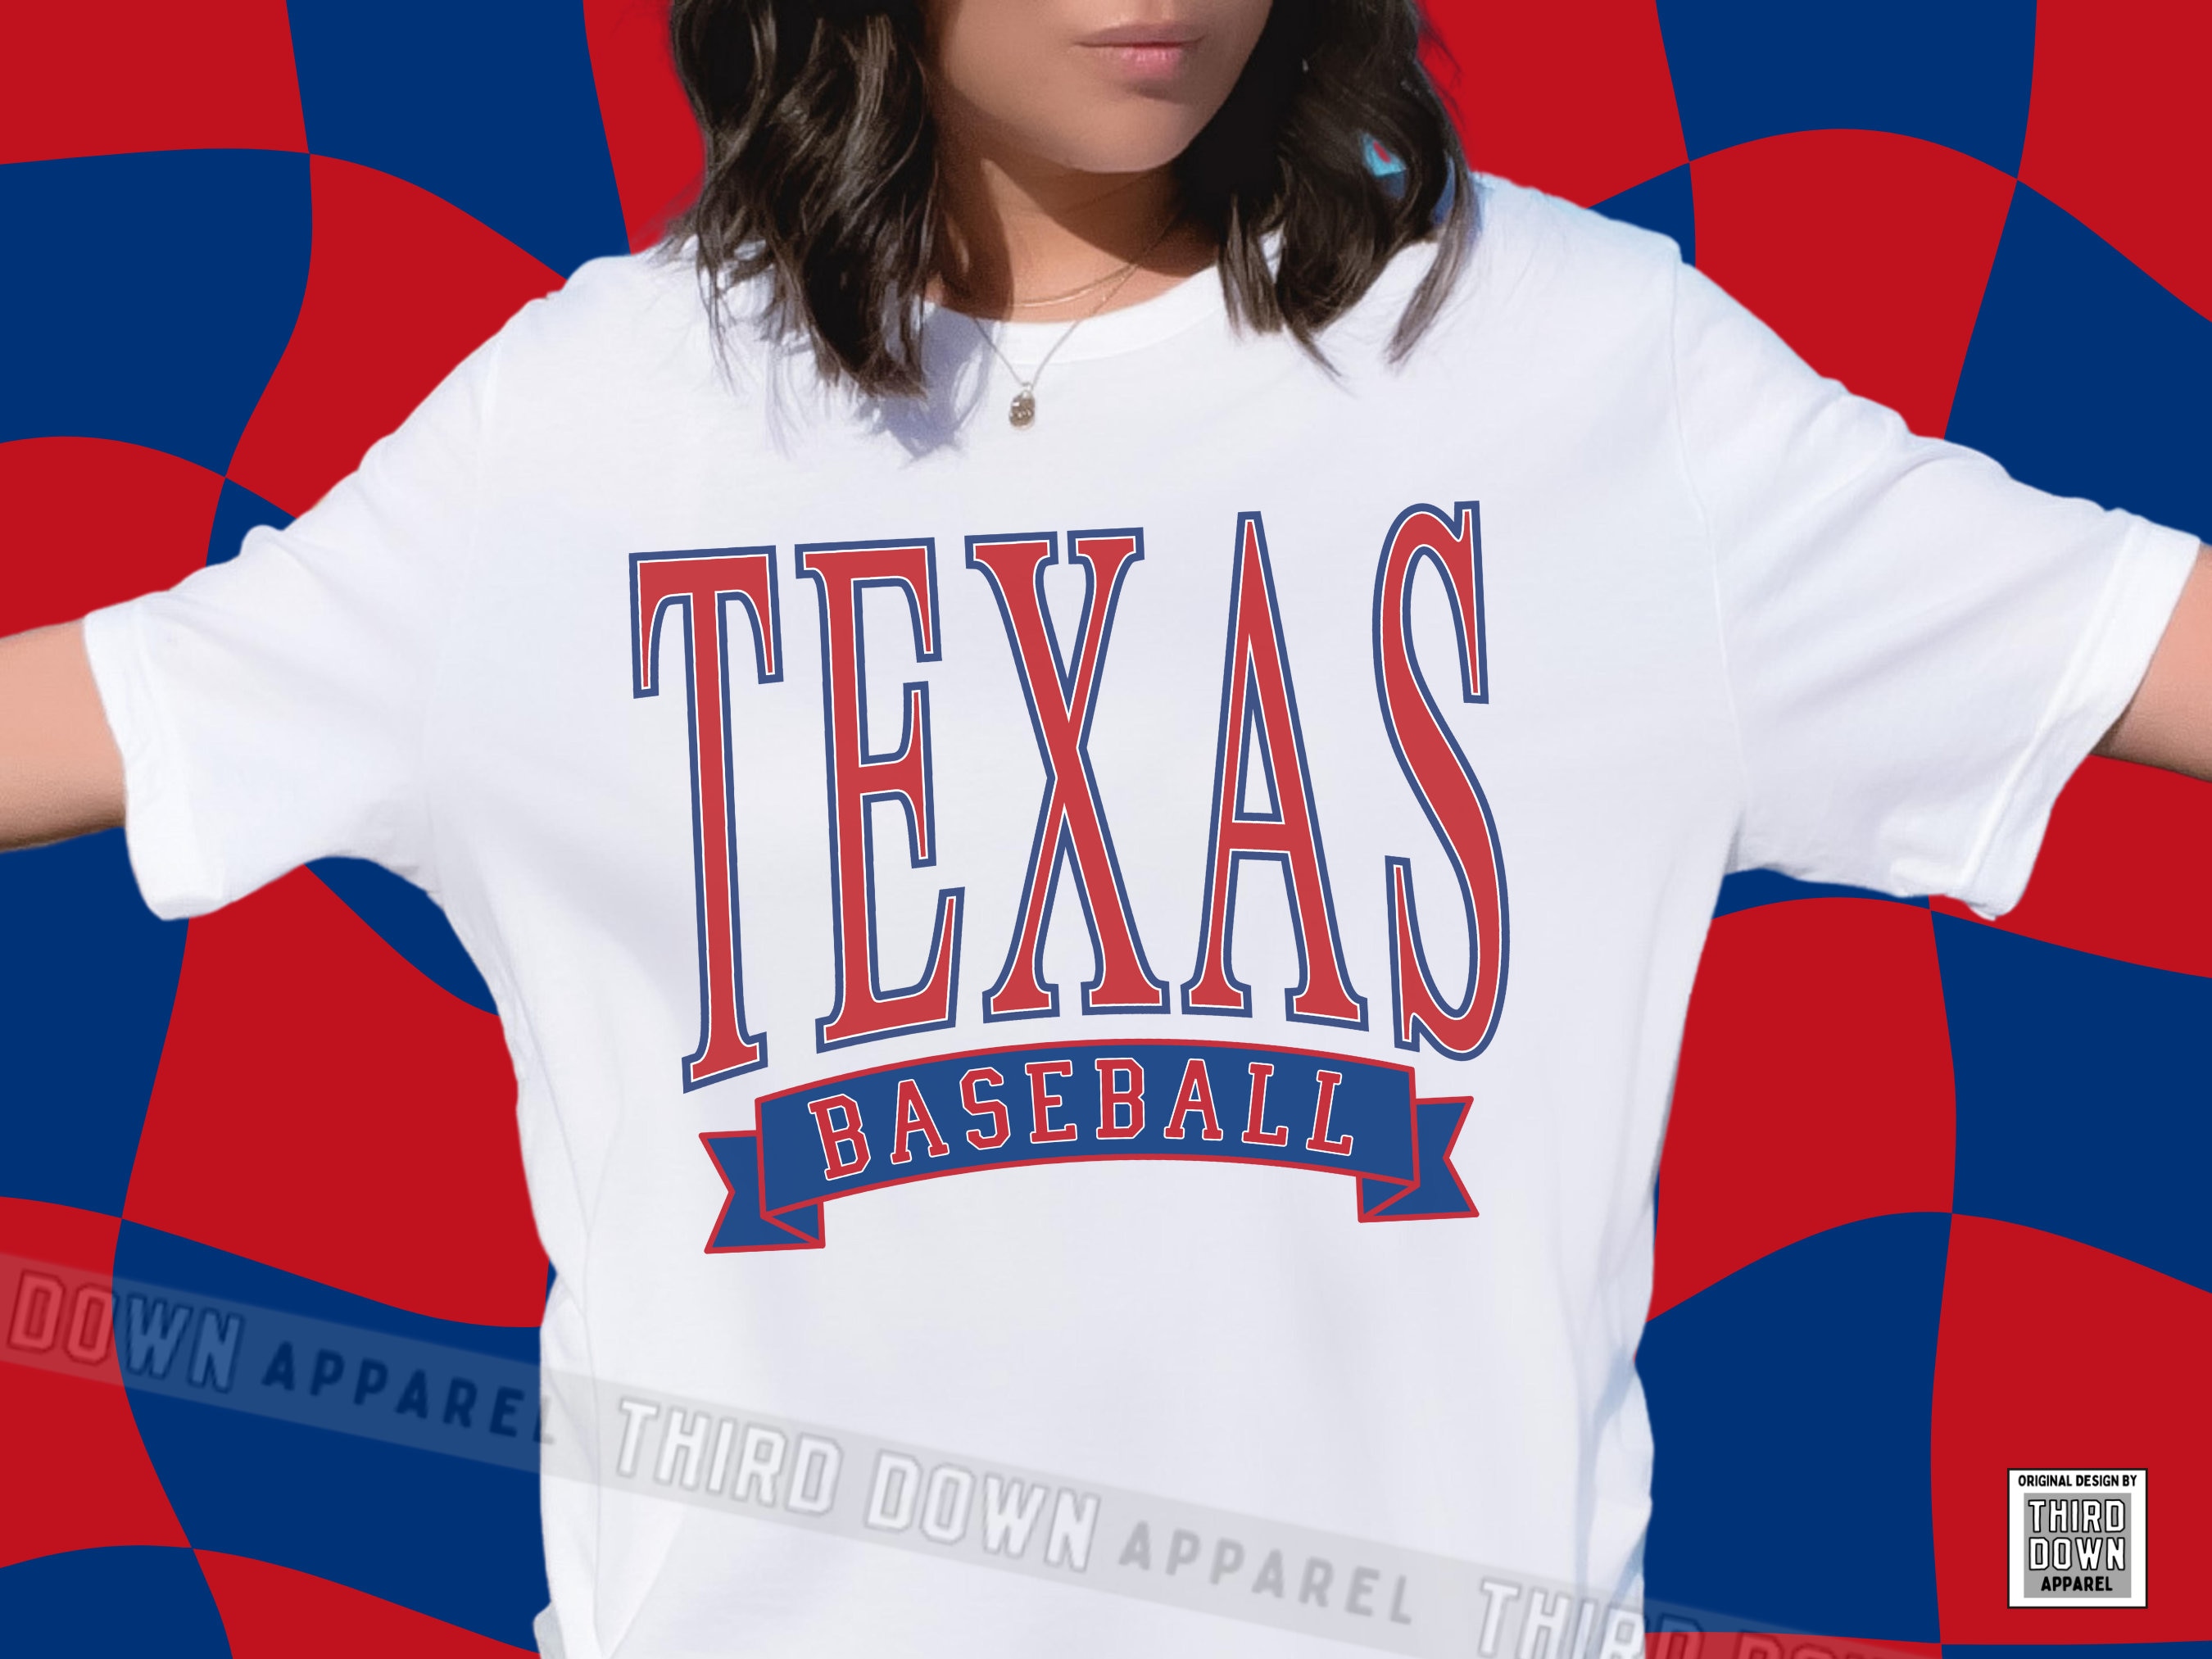 ThirdDownApparel Classic Texas Baseball T-Shirt, Vintage-Style Rangers Baseball Shirt, Unisex Game Day Tee, Gift for Rangers Fans, Baseball Crewneck